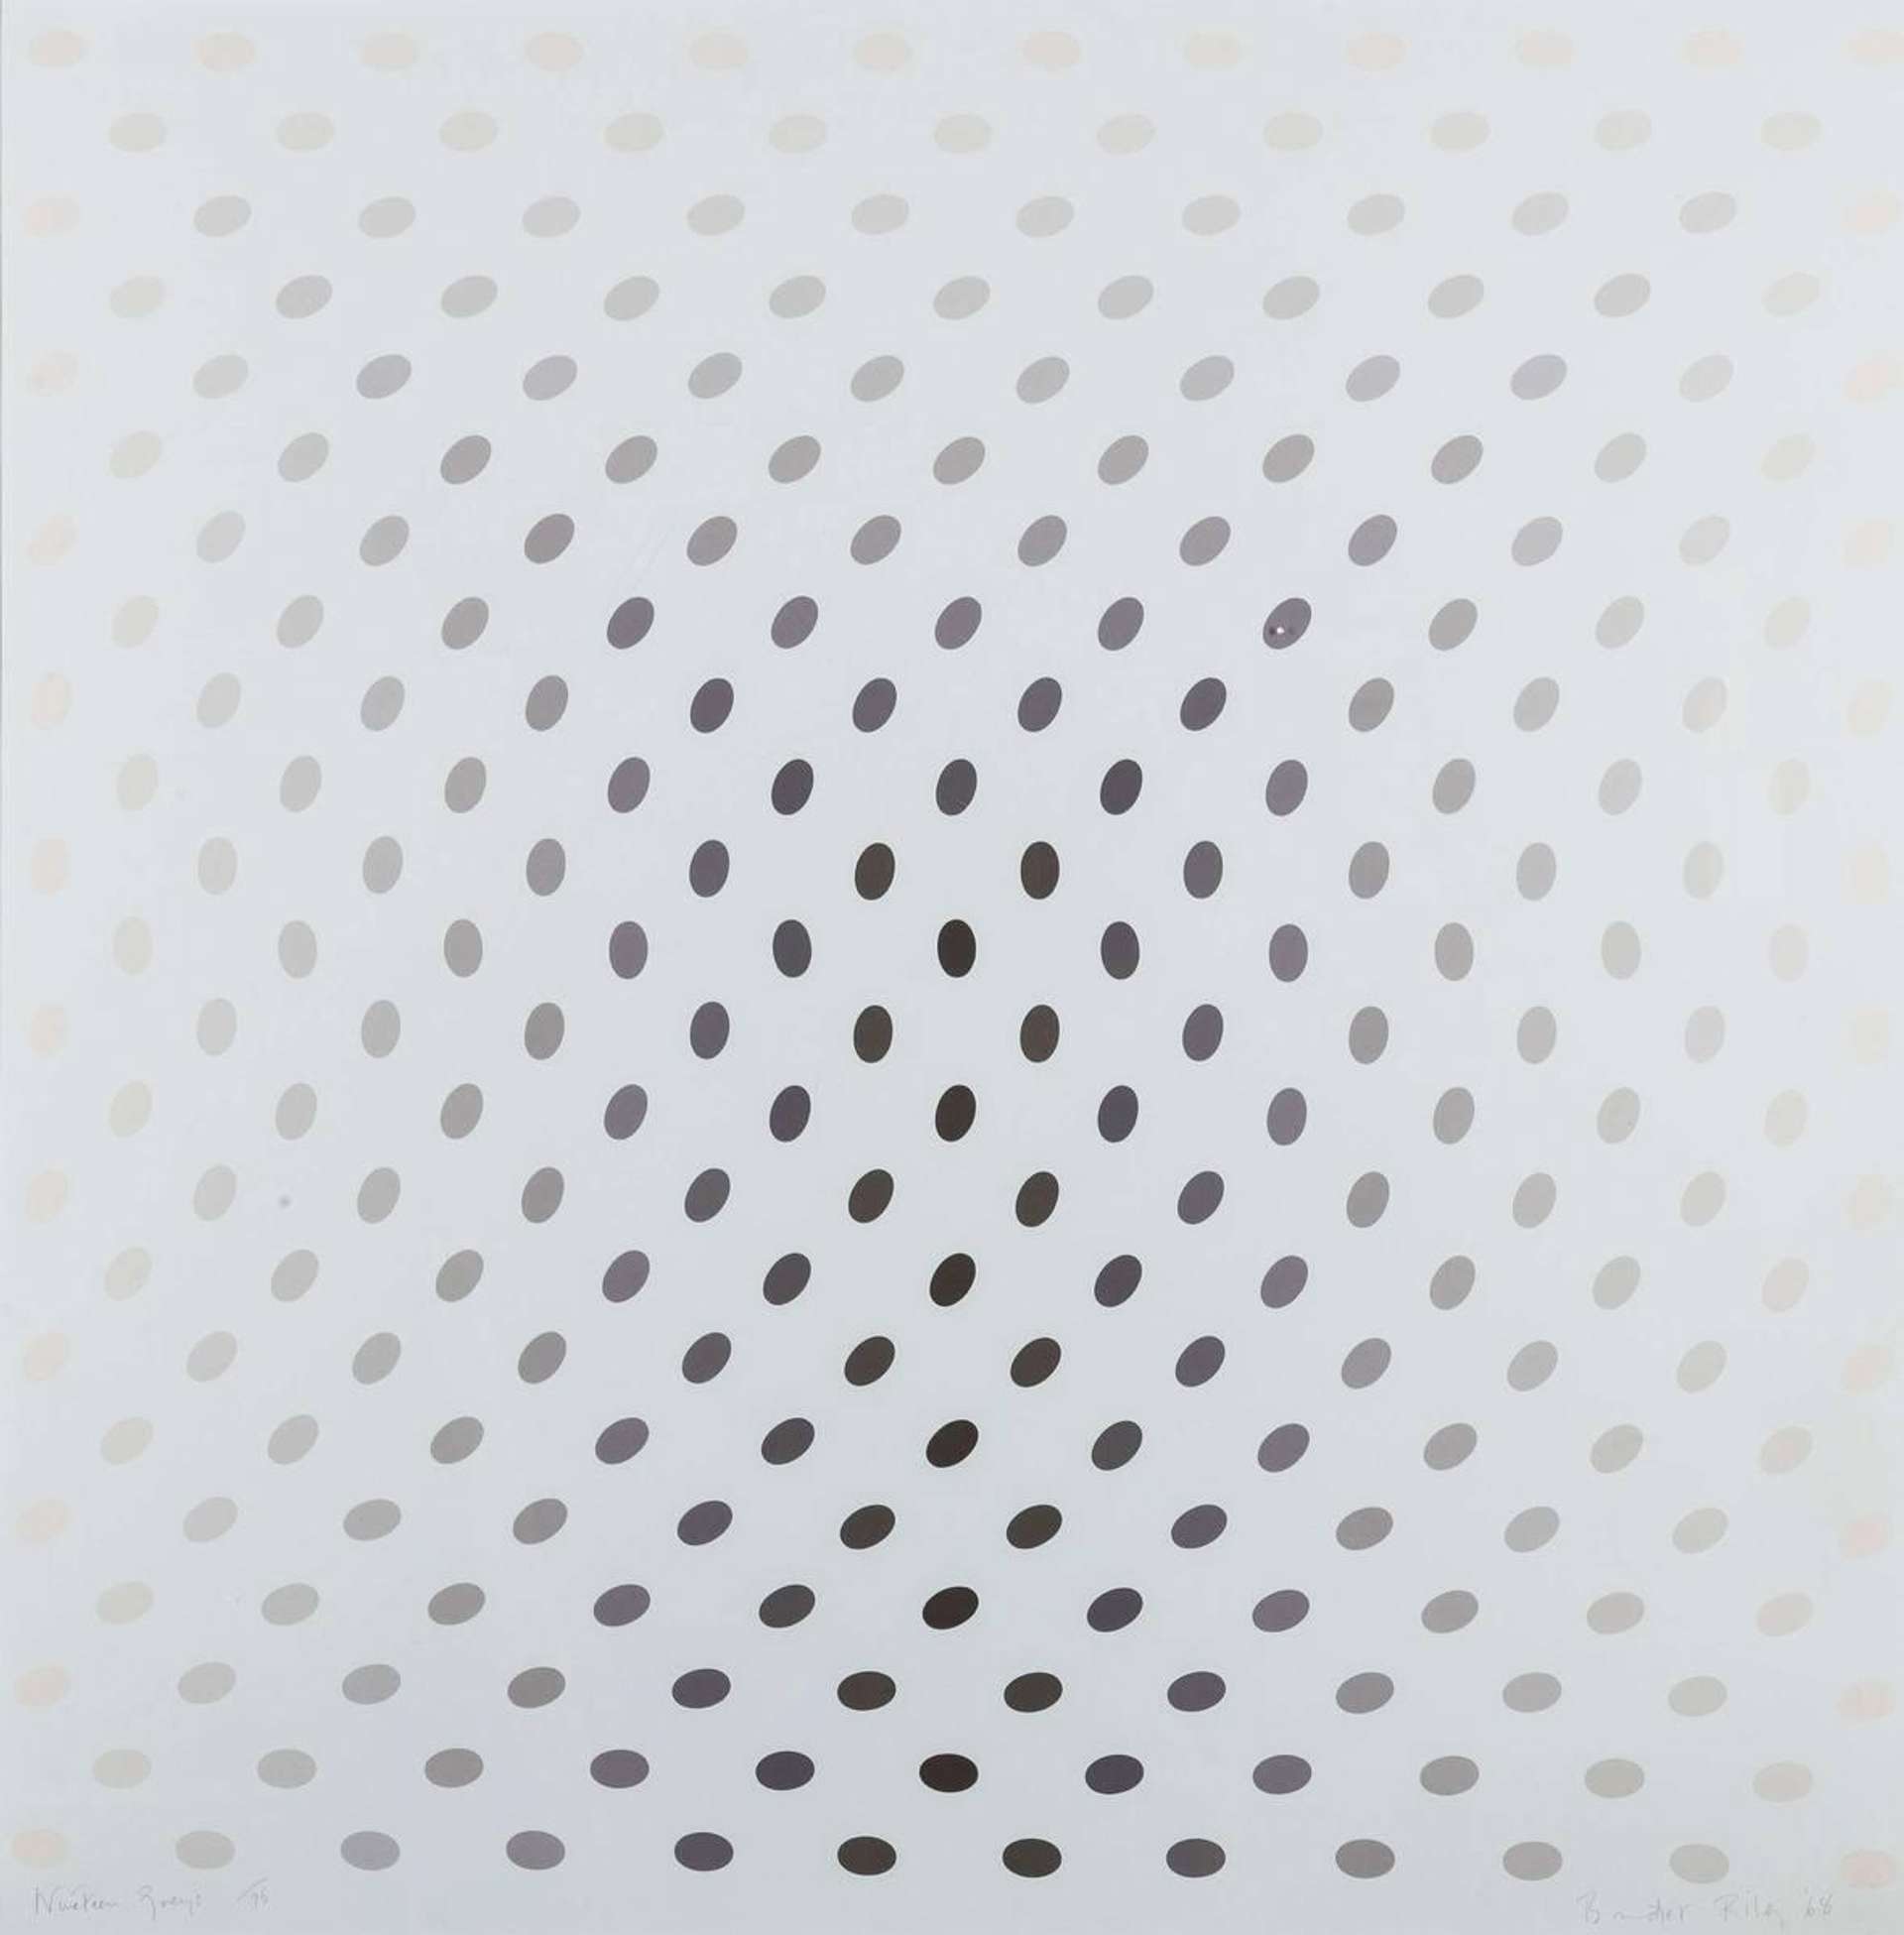 Bridget Riley’s Nineteen Greys C. An Op Art screenprint of gradient black dots against a grey background.